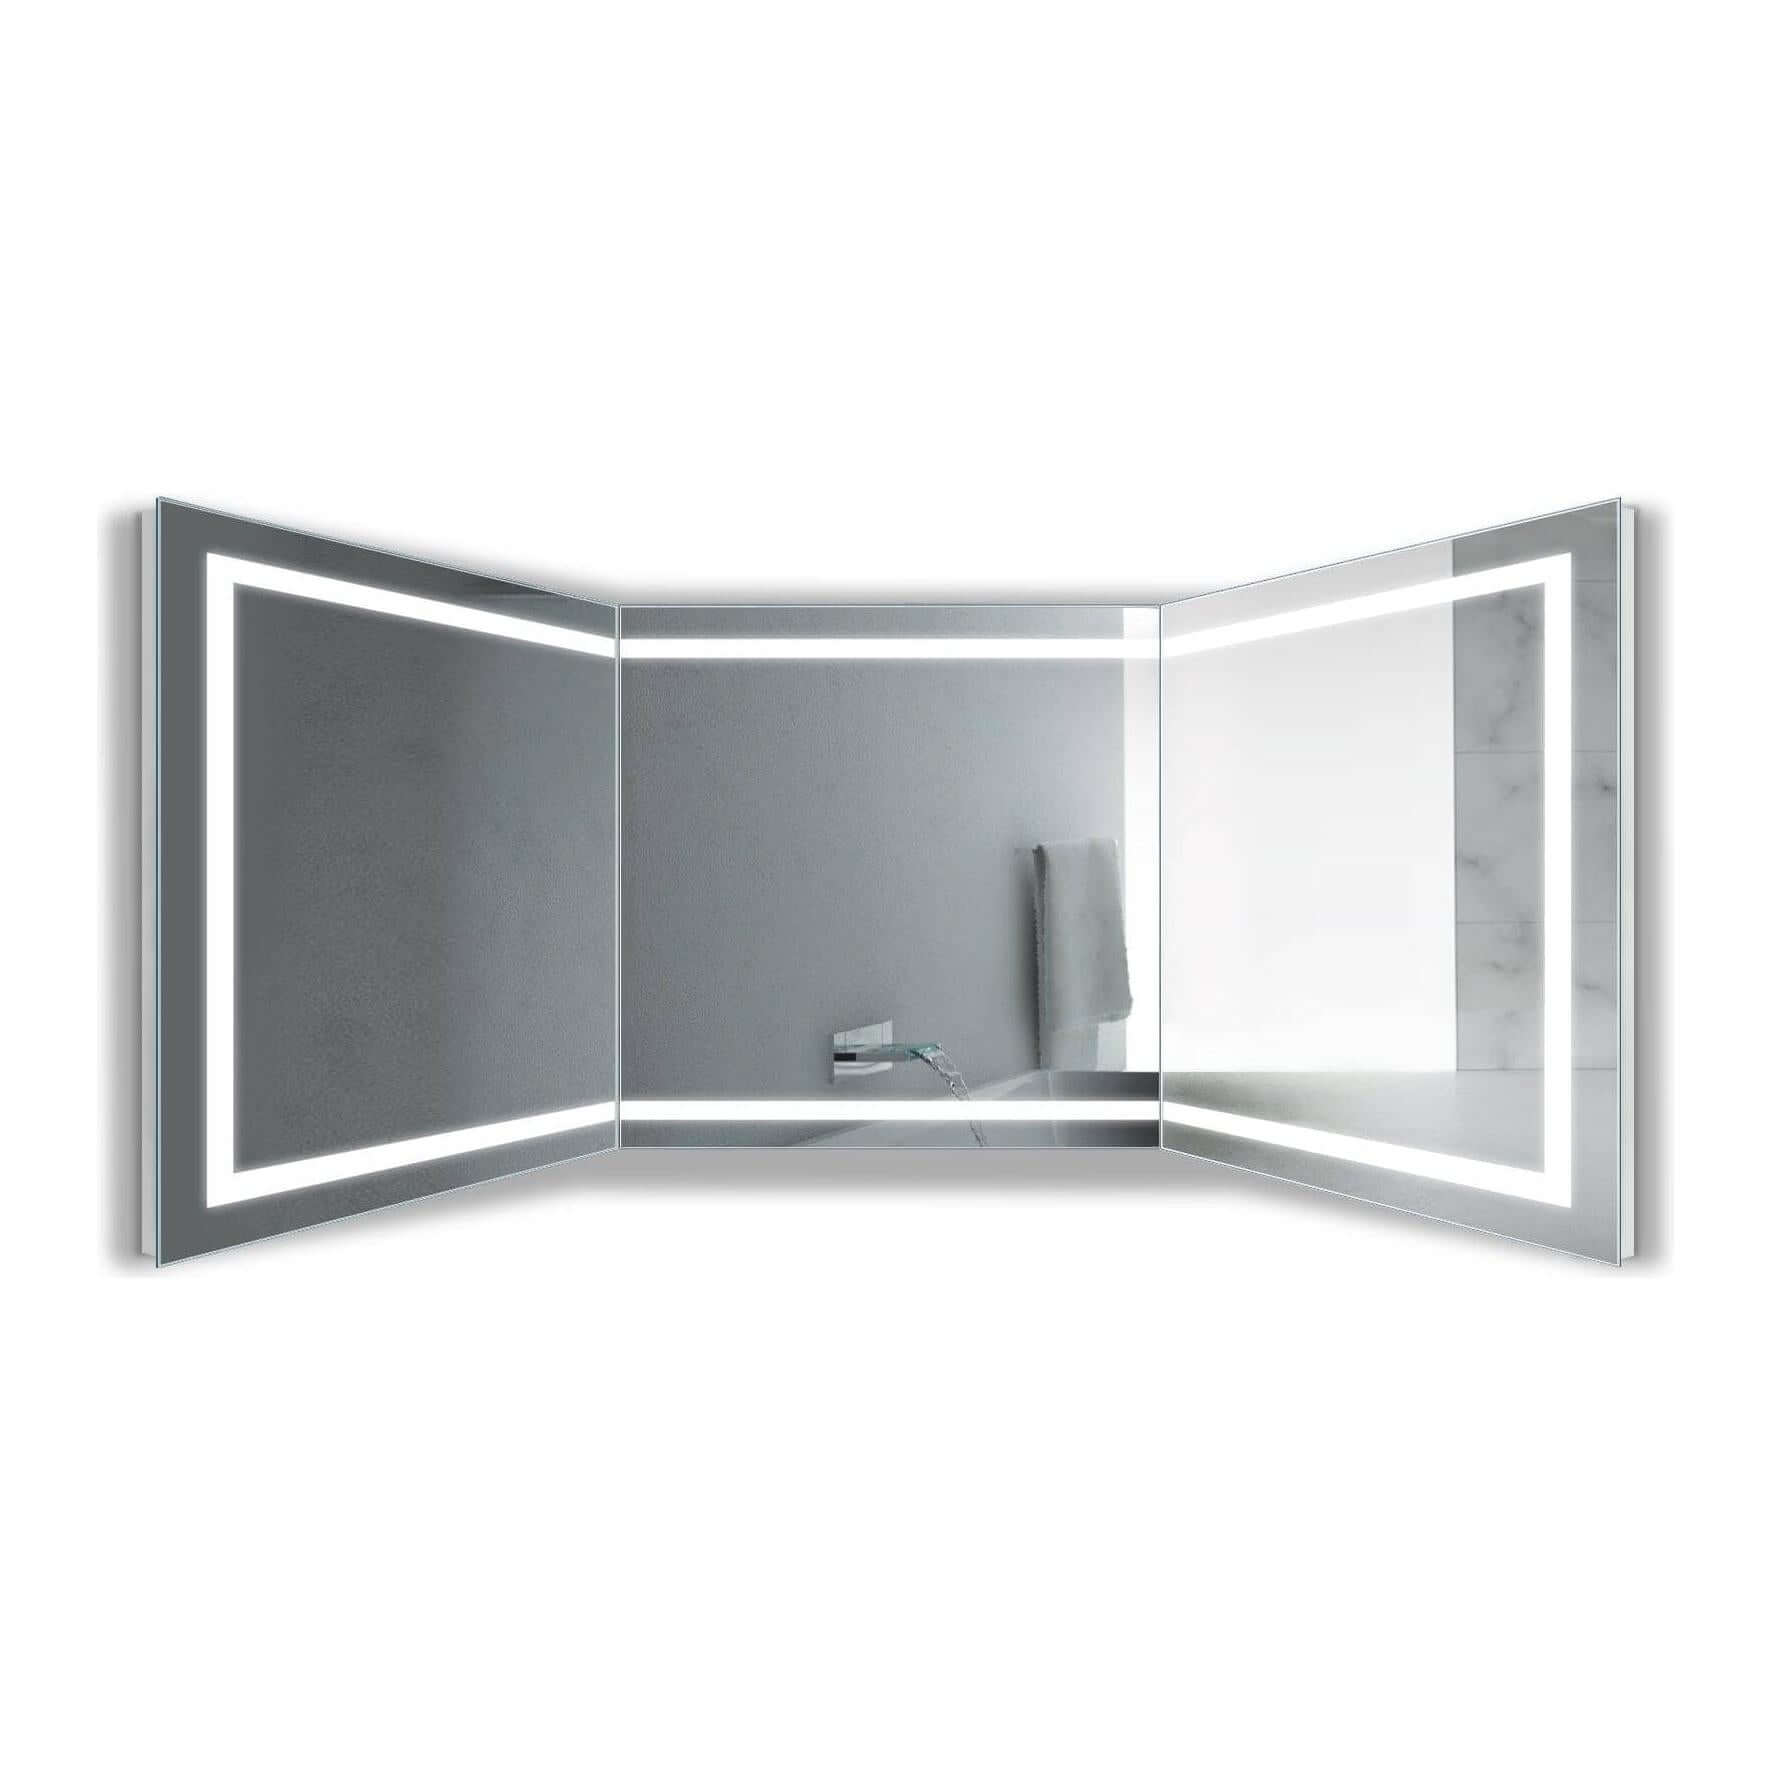 Krugg Modular SM Long 108" x 36" Lighted Bathroom Mirrors Lighted Bathroom Mirror, LED Bathroom Mirror, LED Mirror, Lighted Mirror Krugg Reflections USA 